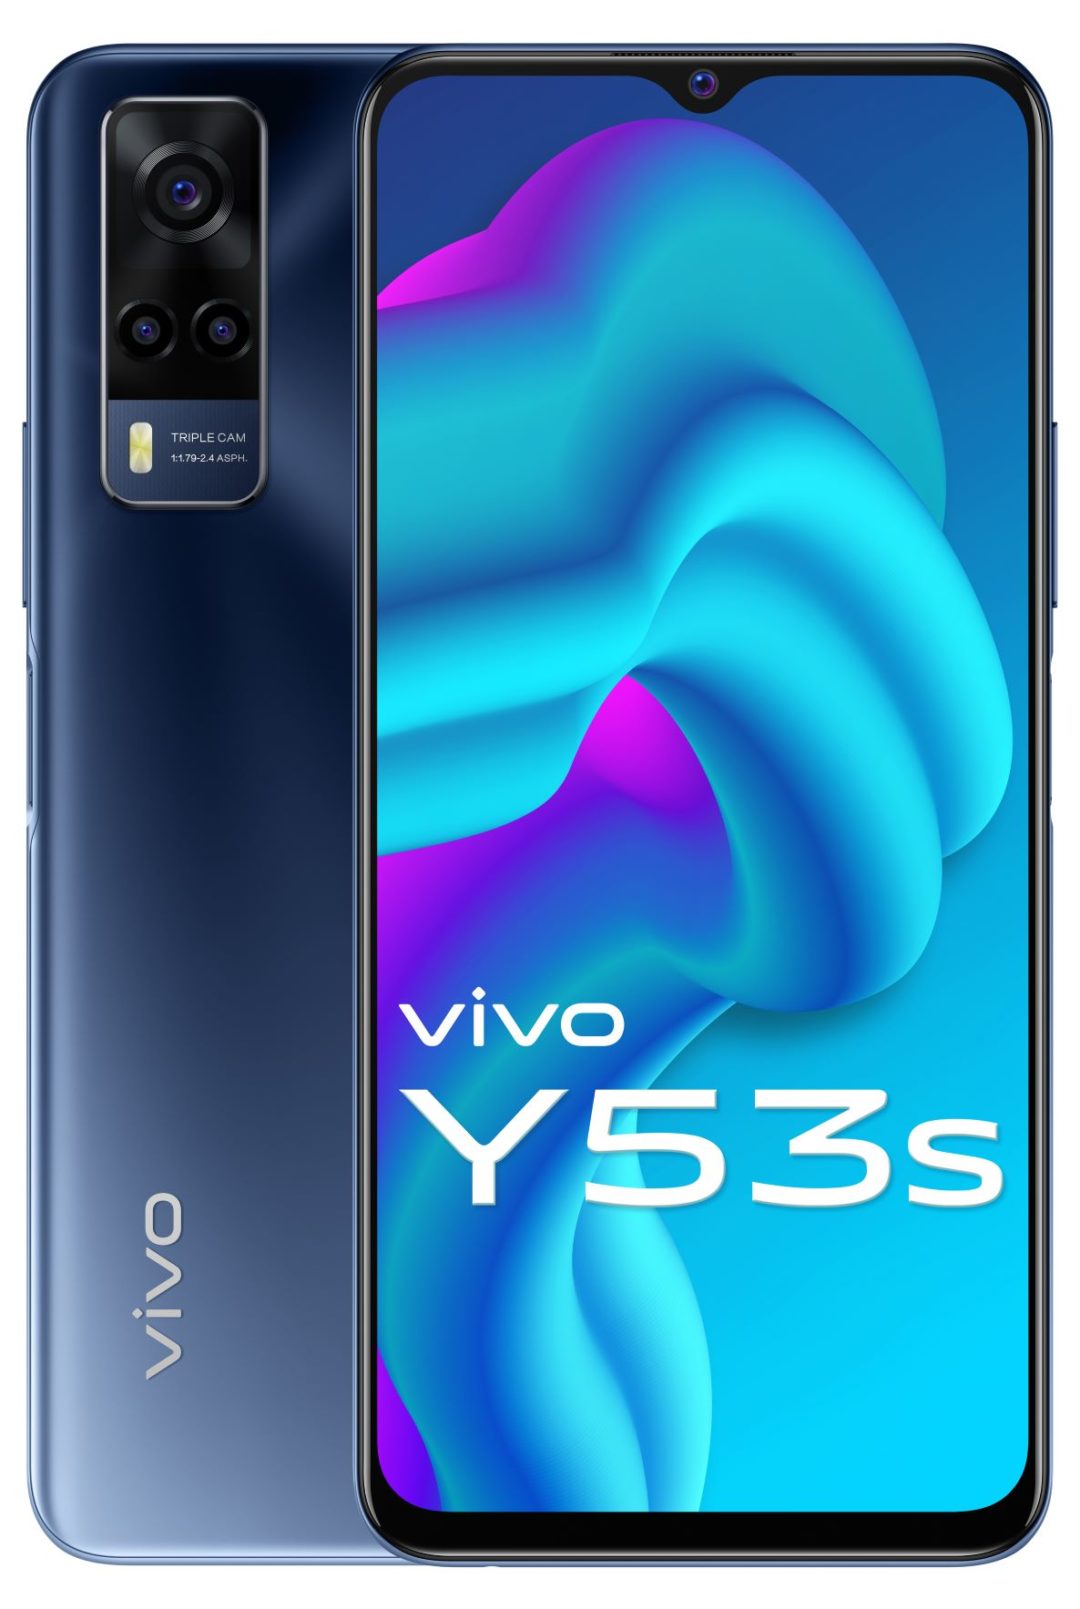 Vivo launches Y53s